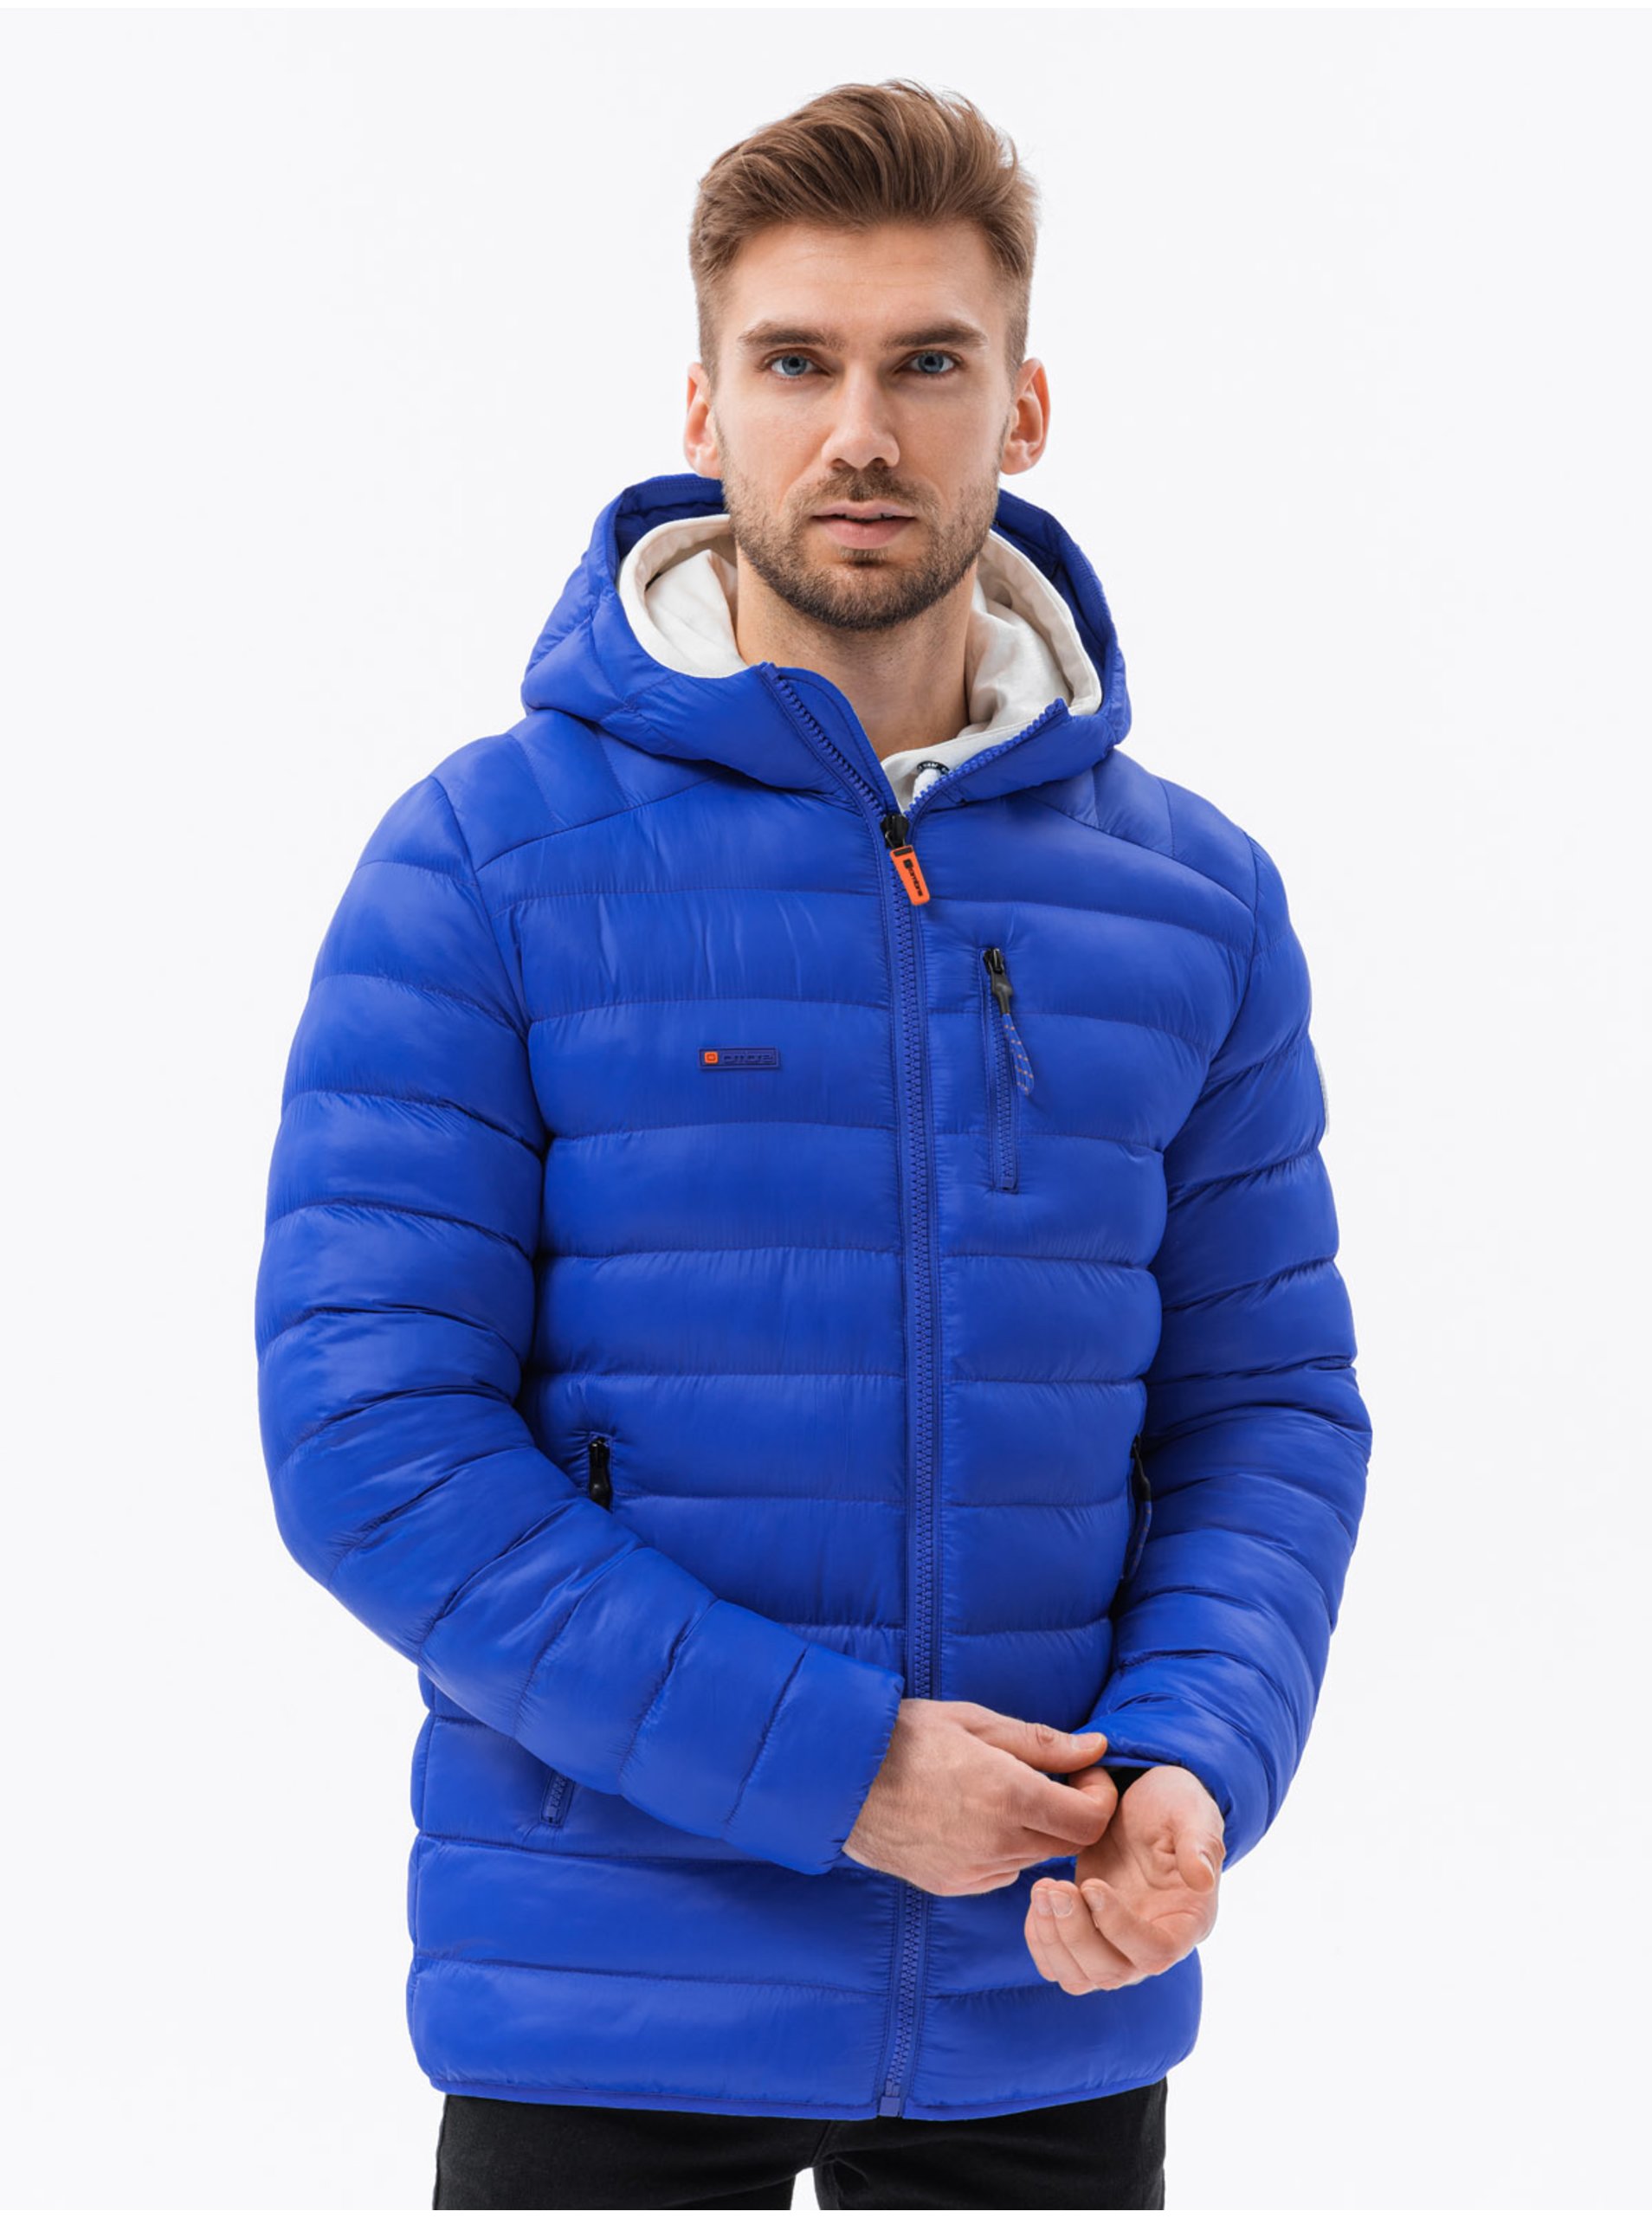 Lacno Zimné bundy pre mužov Ombre Clothing - modrá